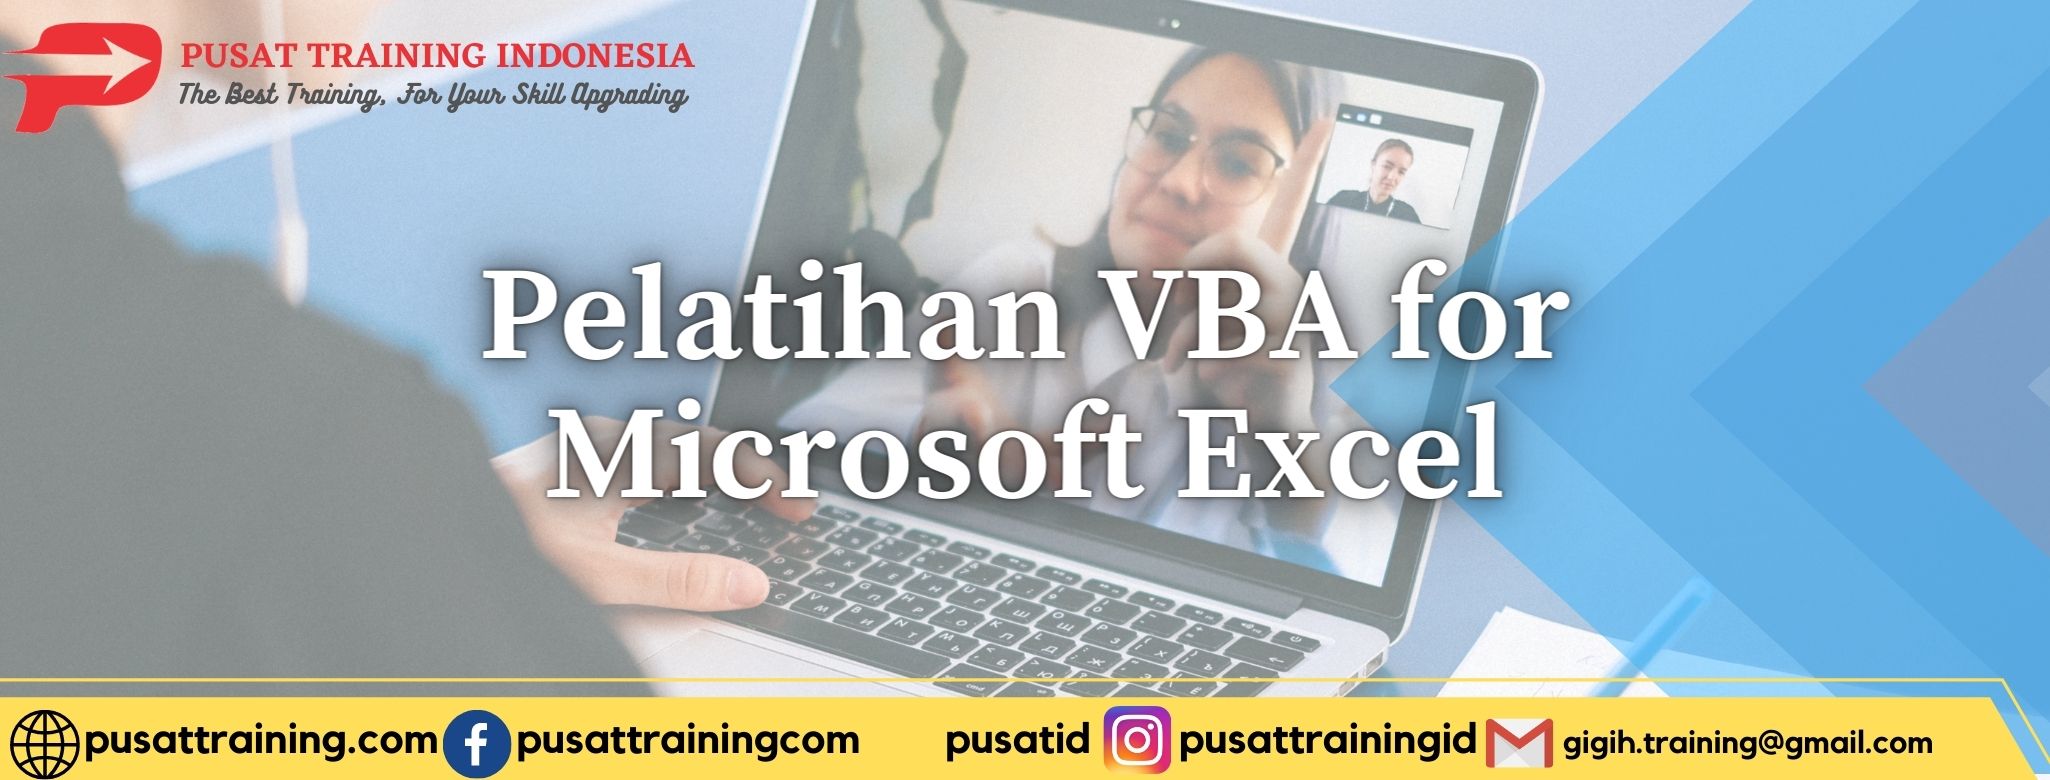 Pelatihan-VBA-for-Microsoft-Excel